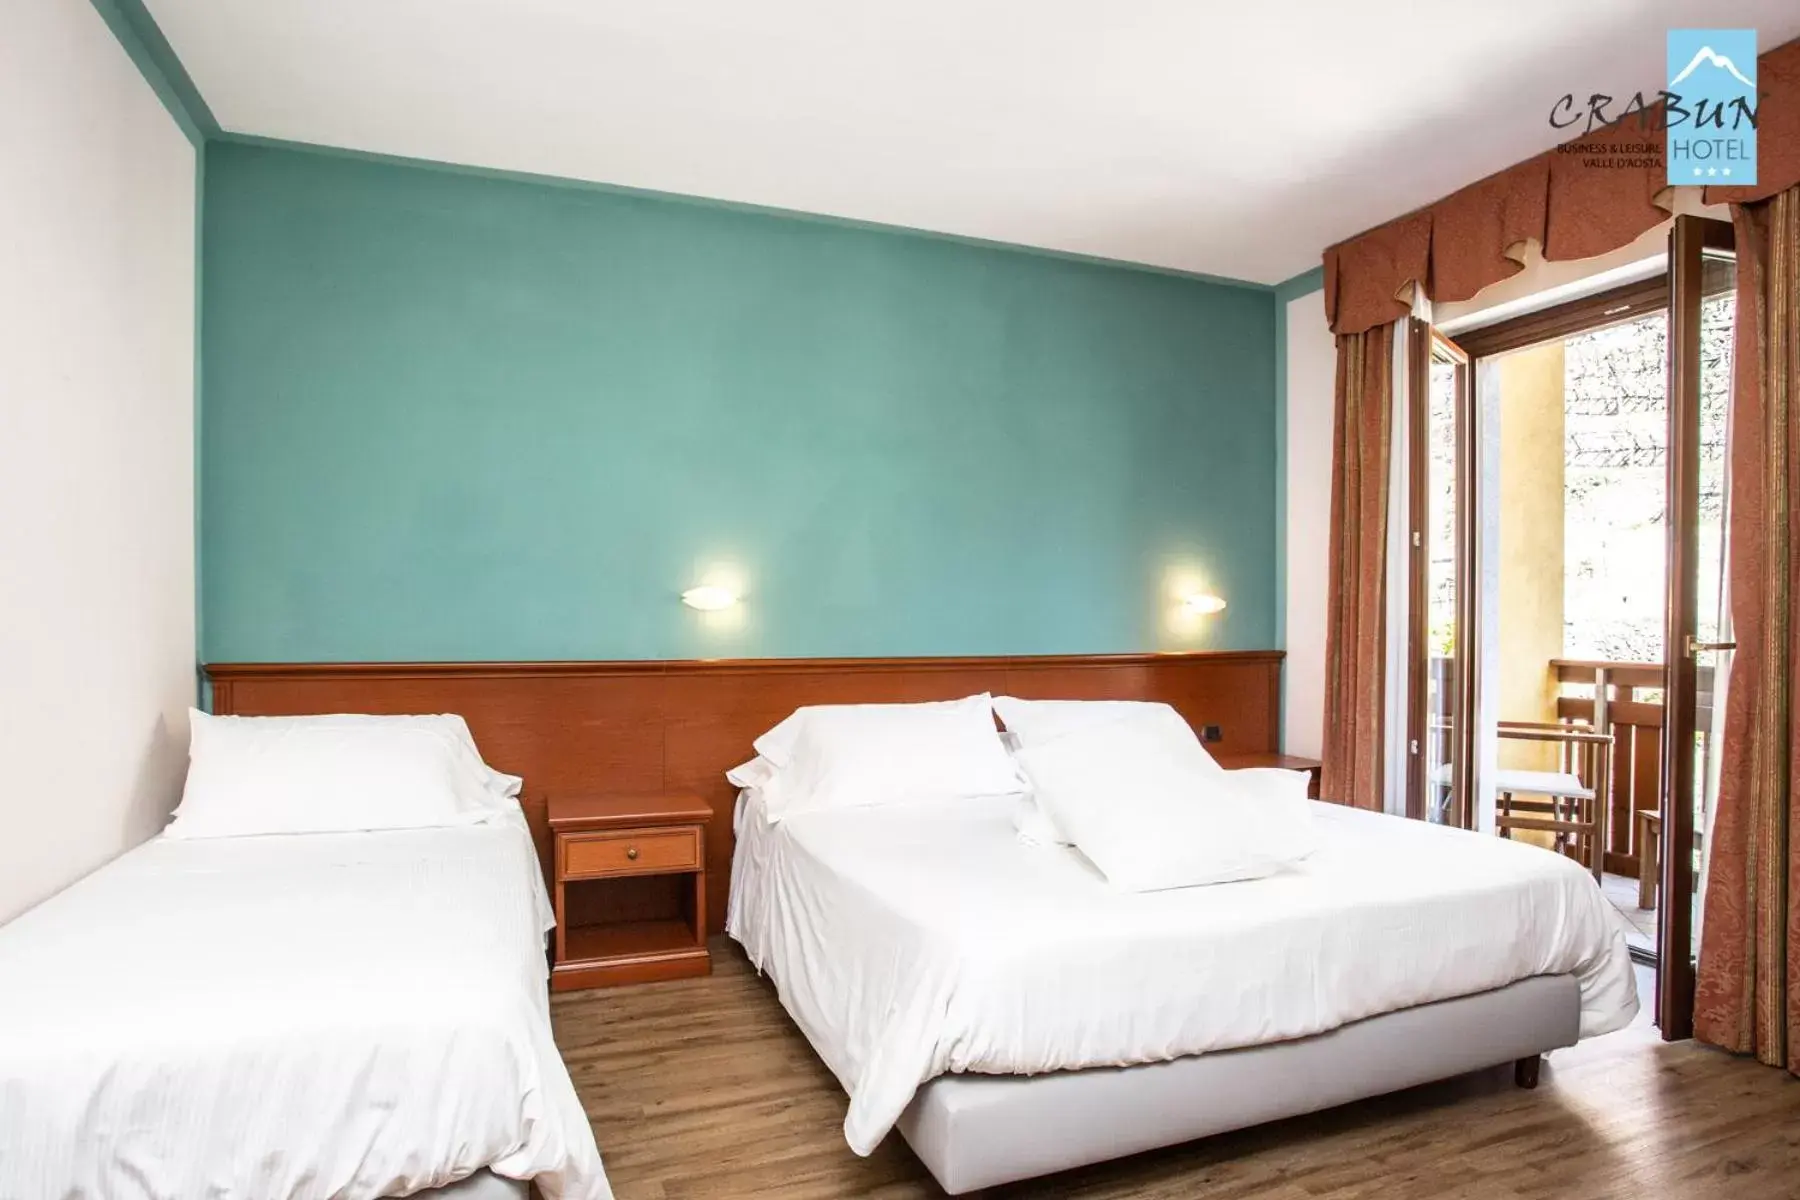 Bed in Crabun Hotel